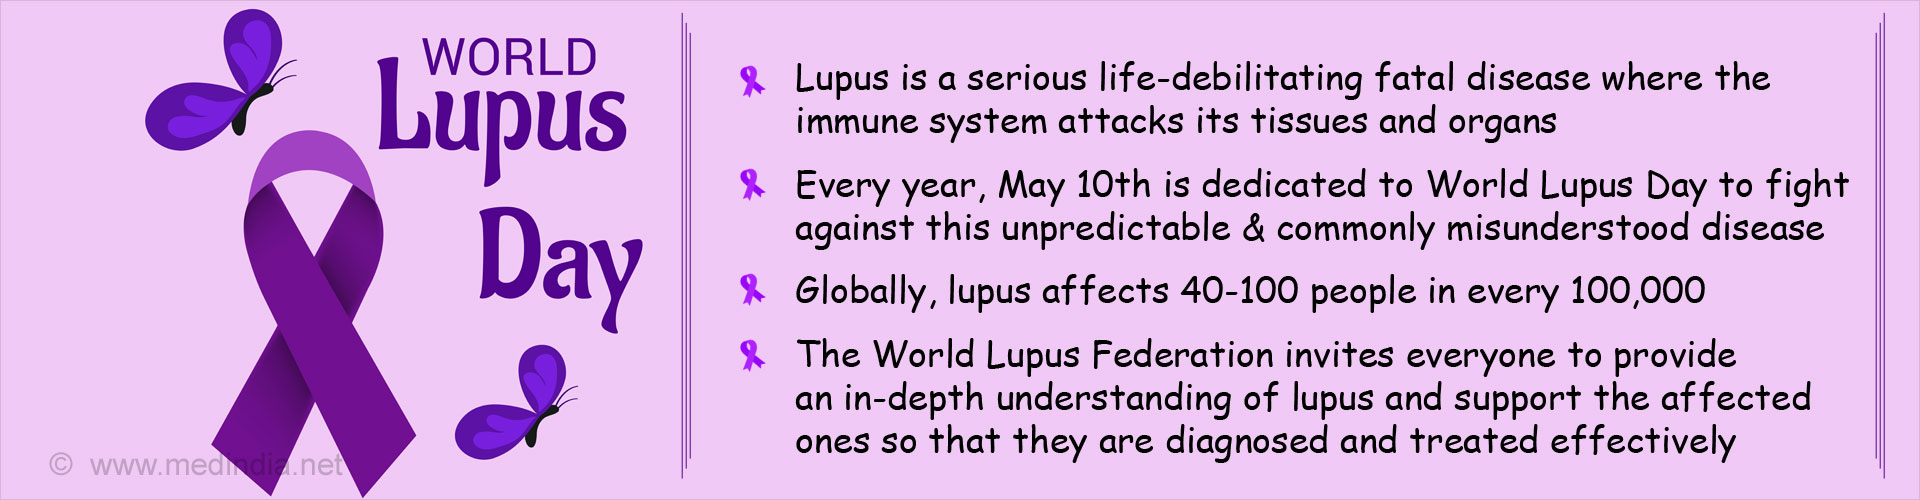 World Lupus Day 2021 